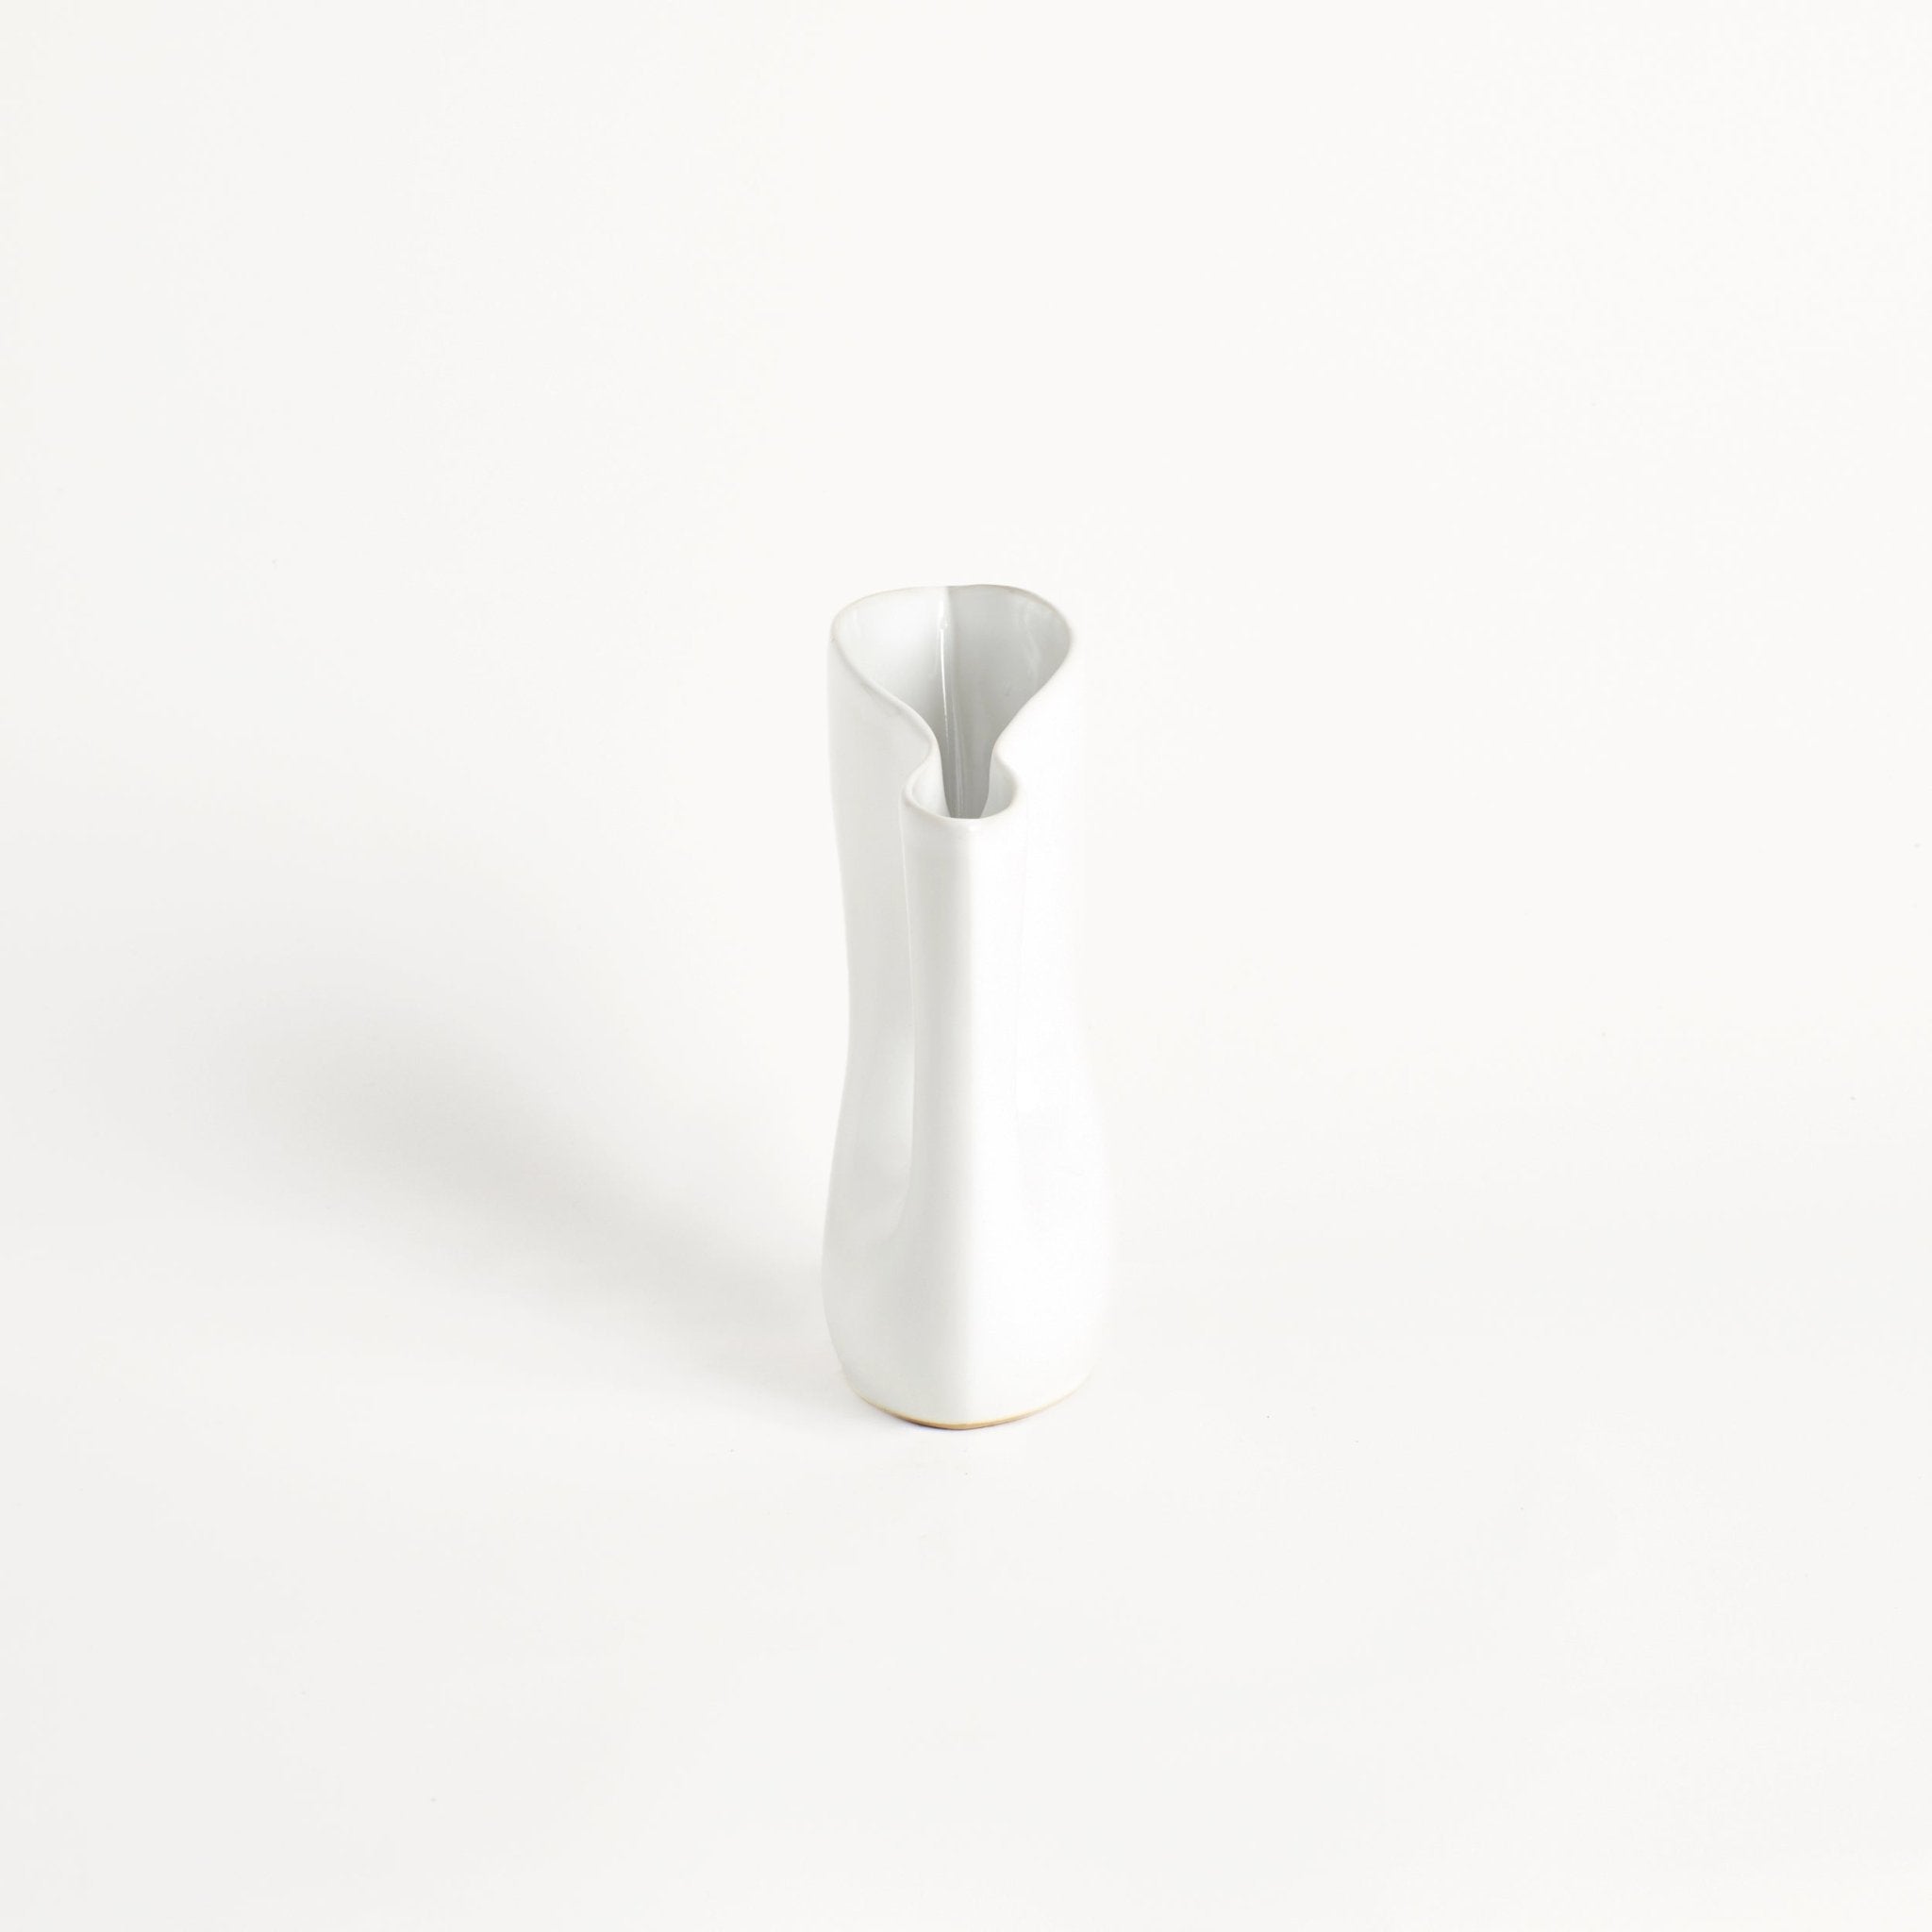 Mamasita Jug - White vase by Project 213A